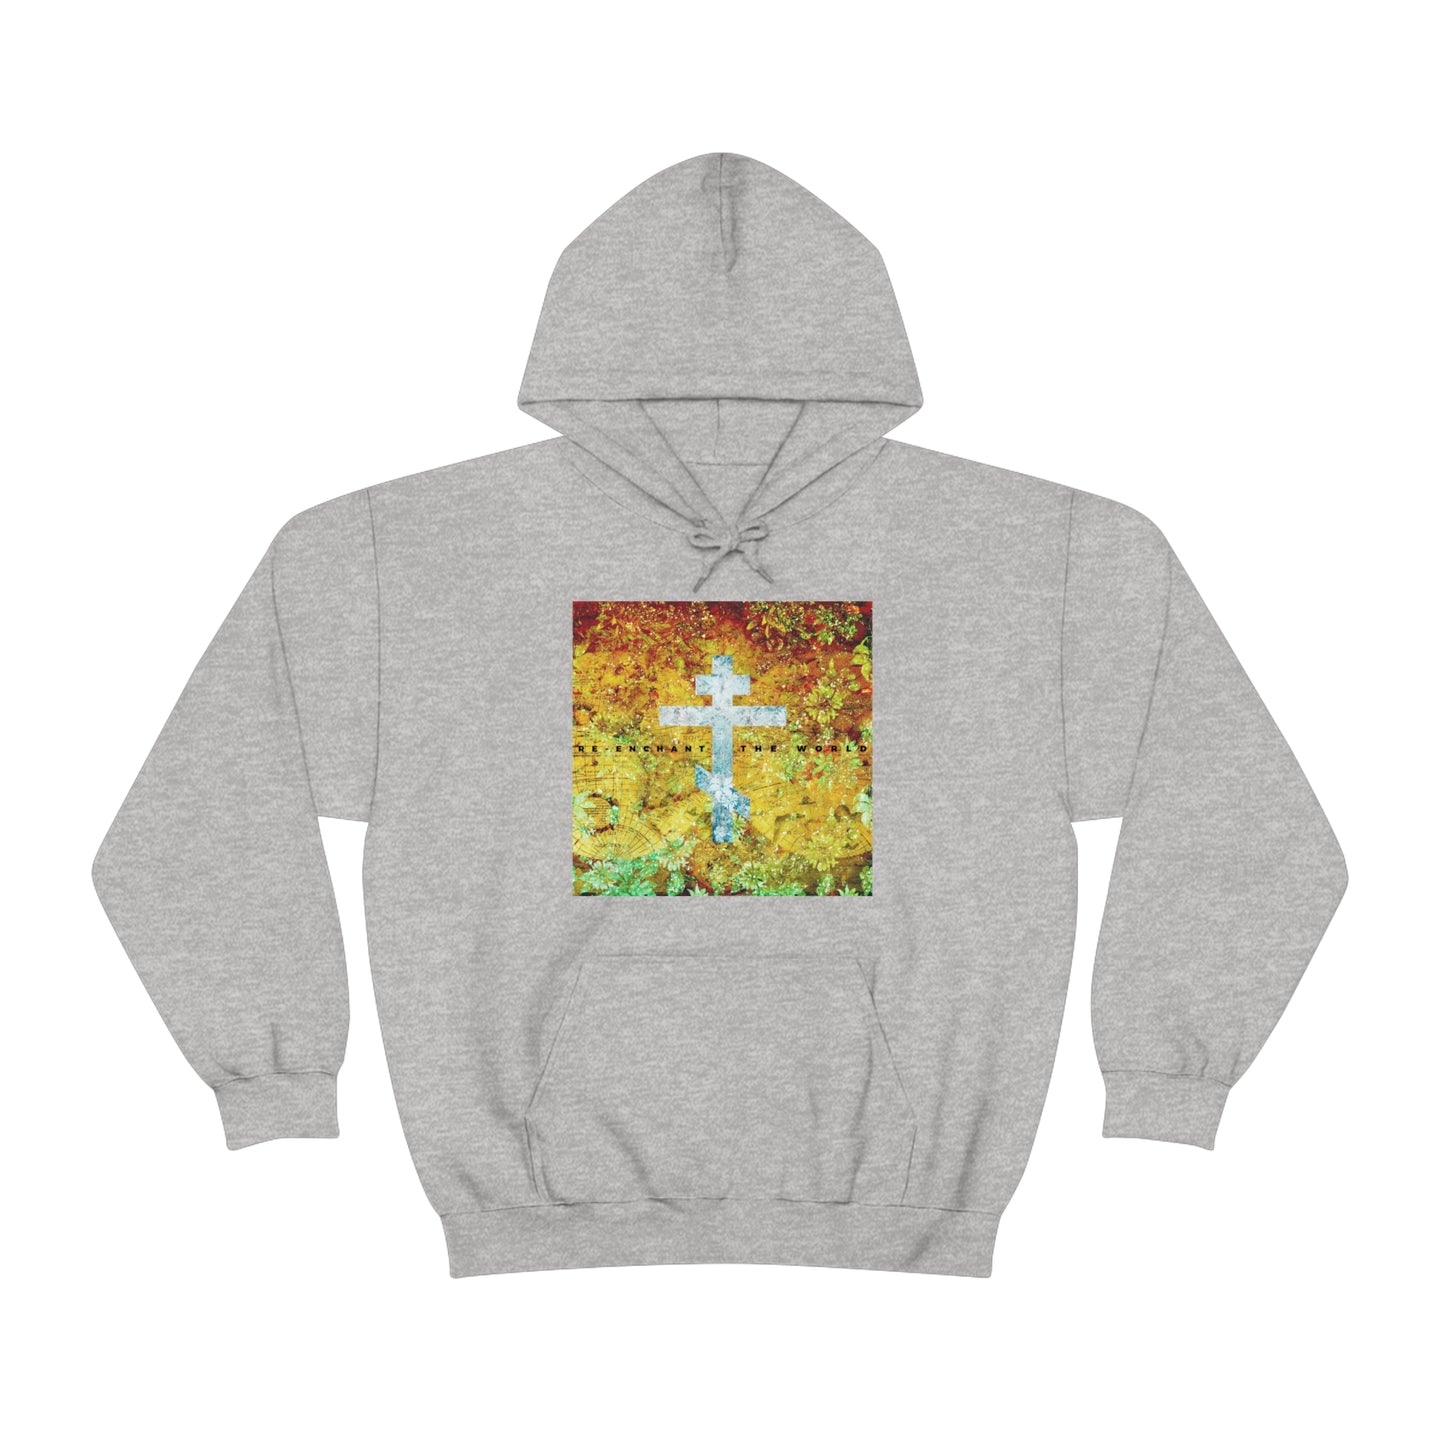 Re-Enchant the World No. 5 | Orthodox Christian Hoodie / Hooded Sweatshirt